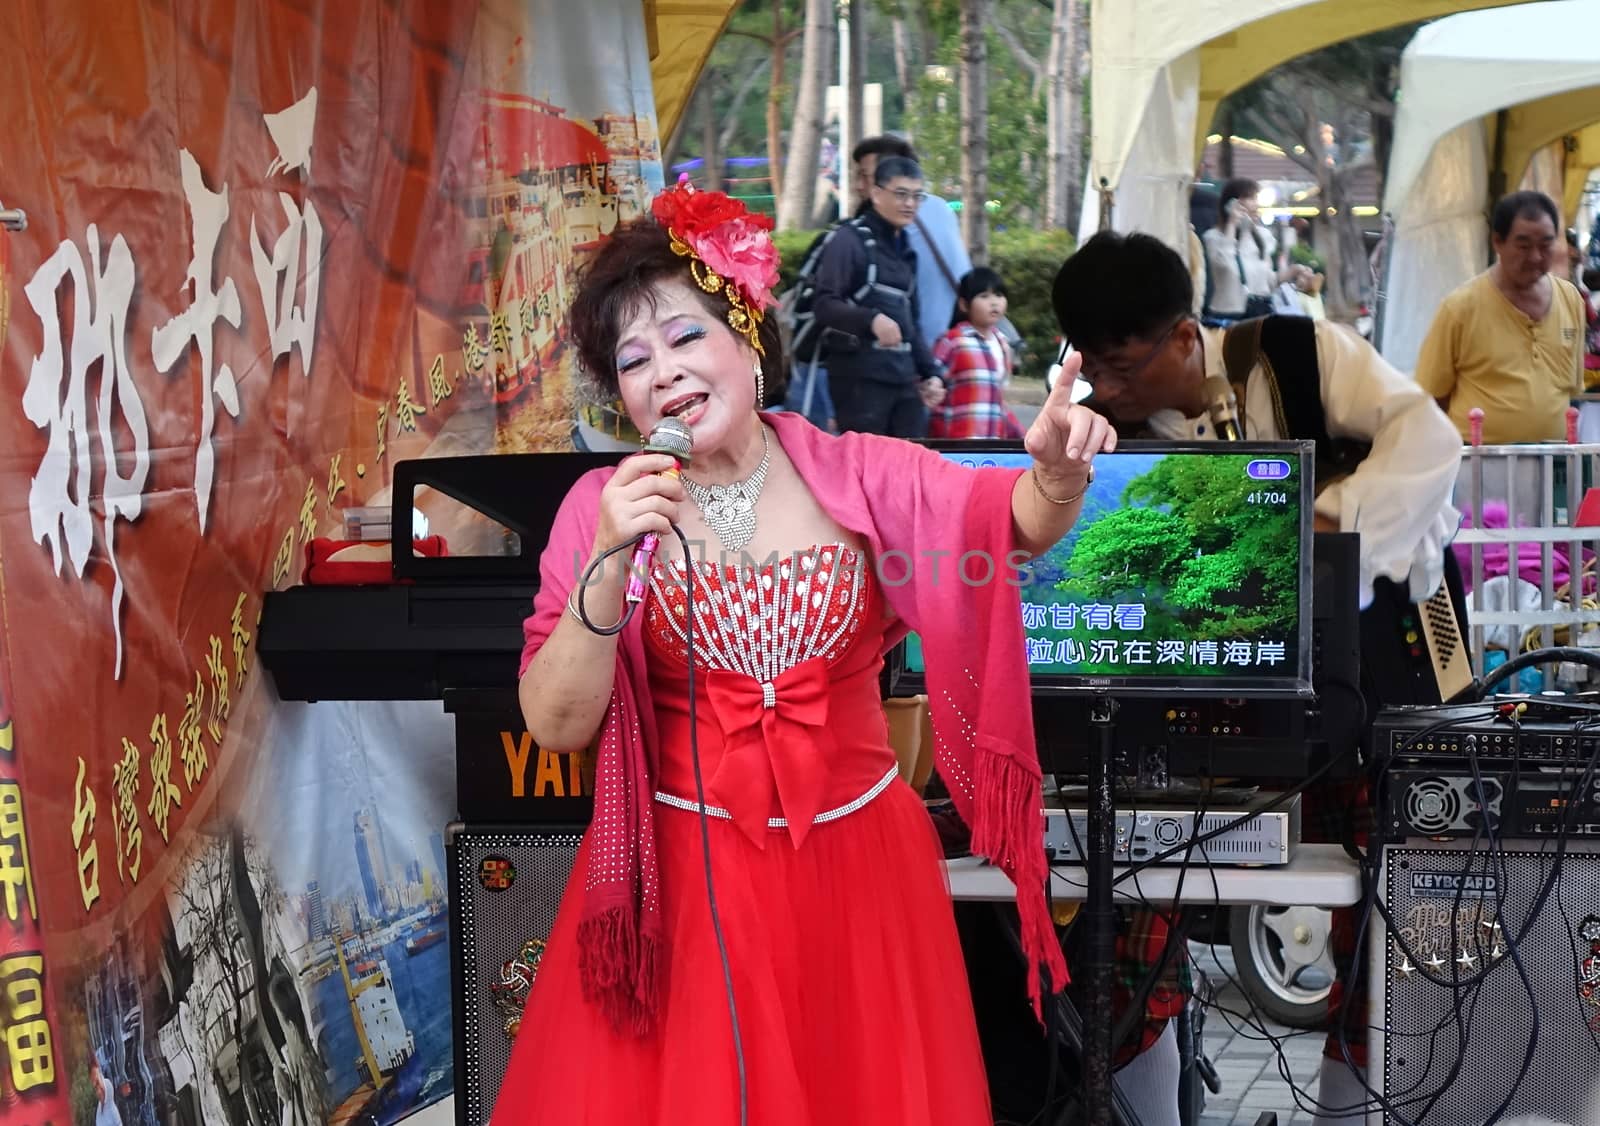 A Female Karaoke Performer in Taiwan by shiyali